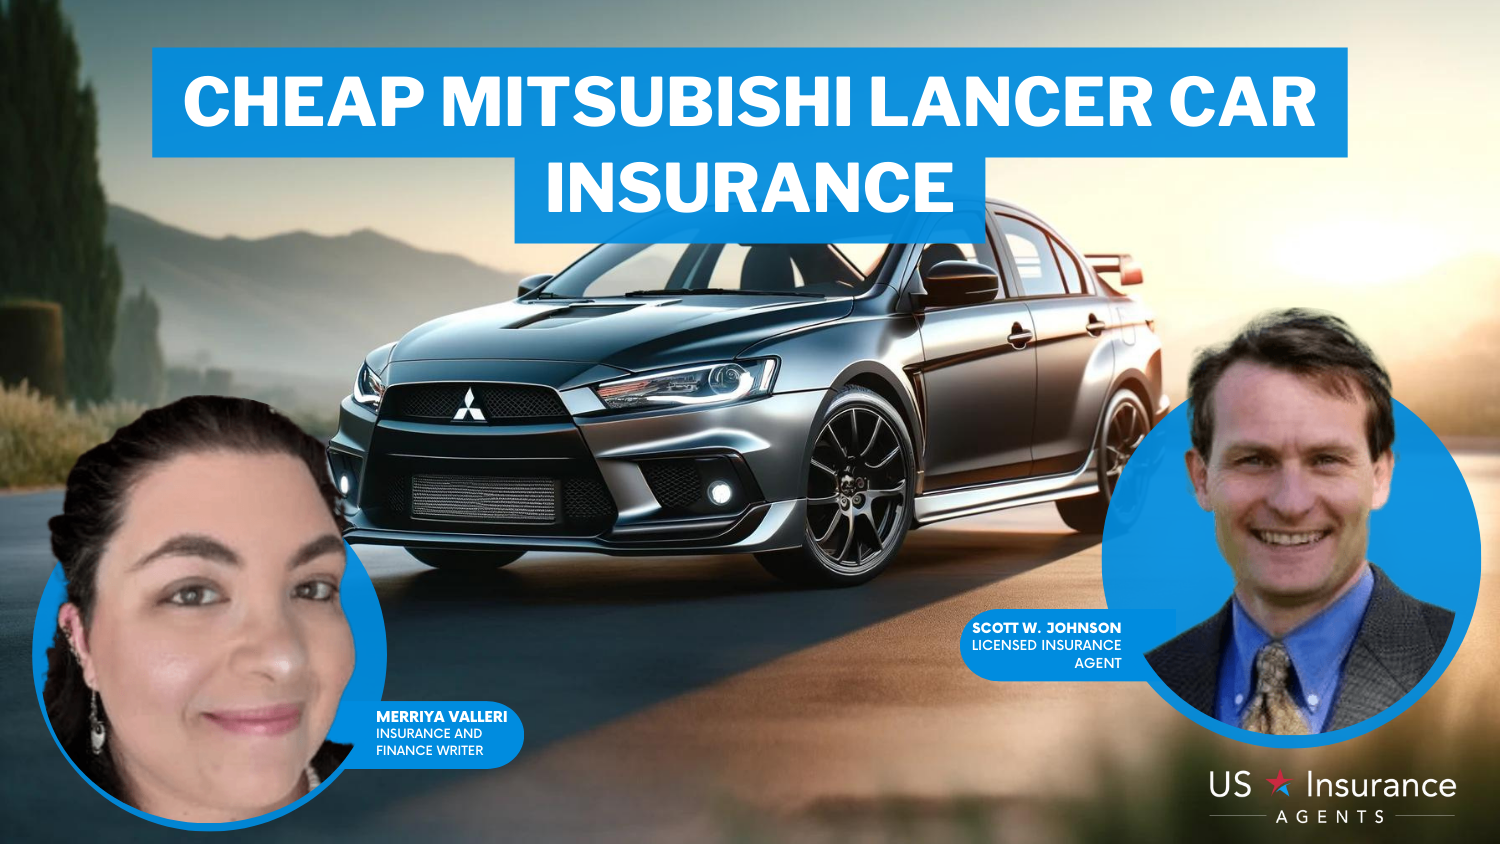 State Farm, USAA, and Progressive: Cheap Mitsubishi Lancer car insurance